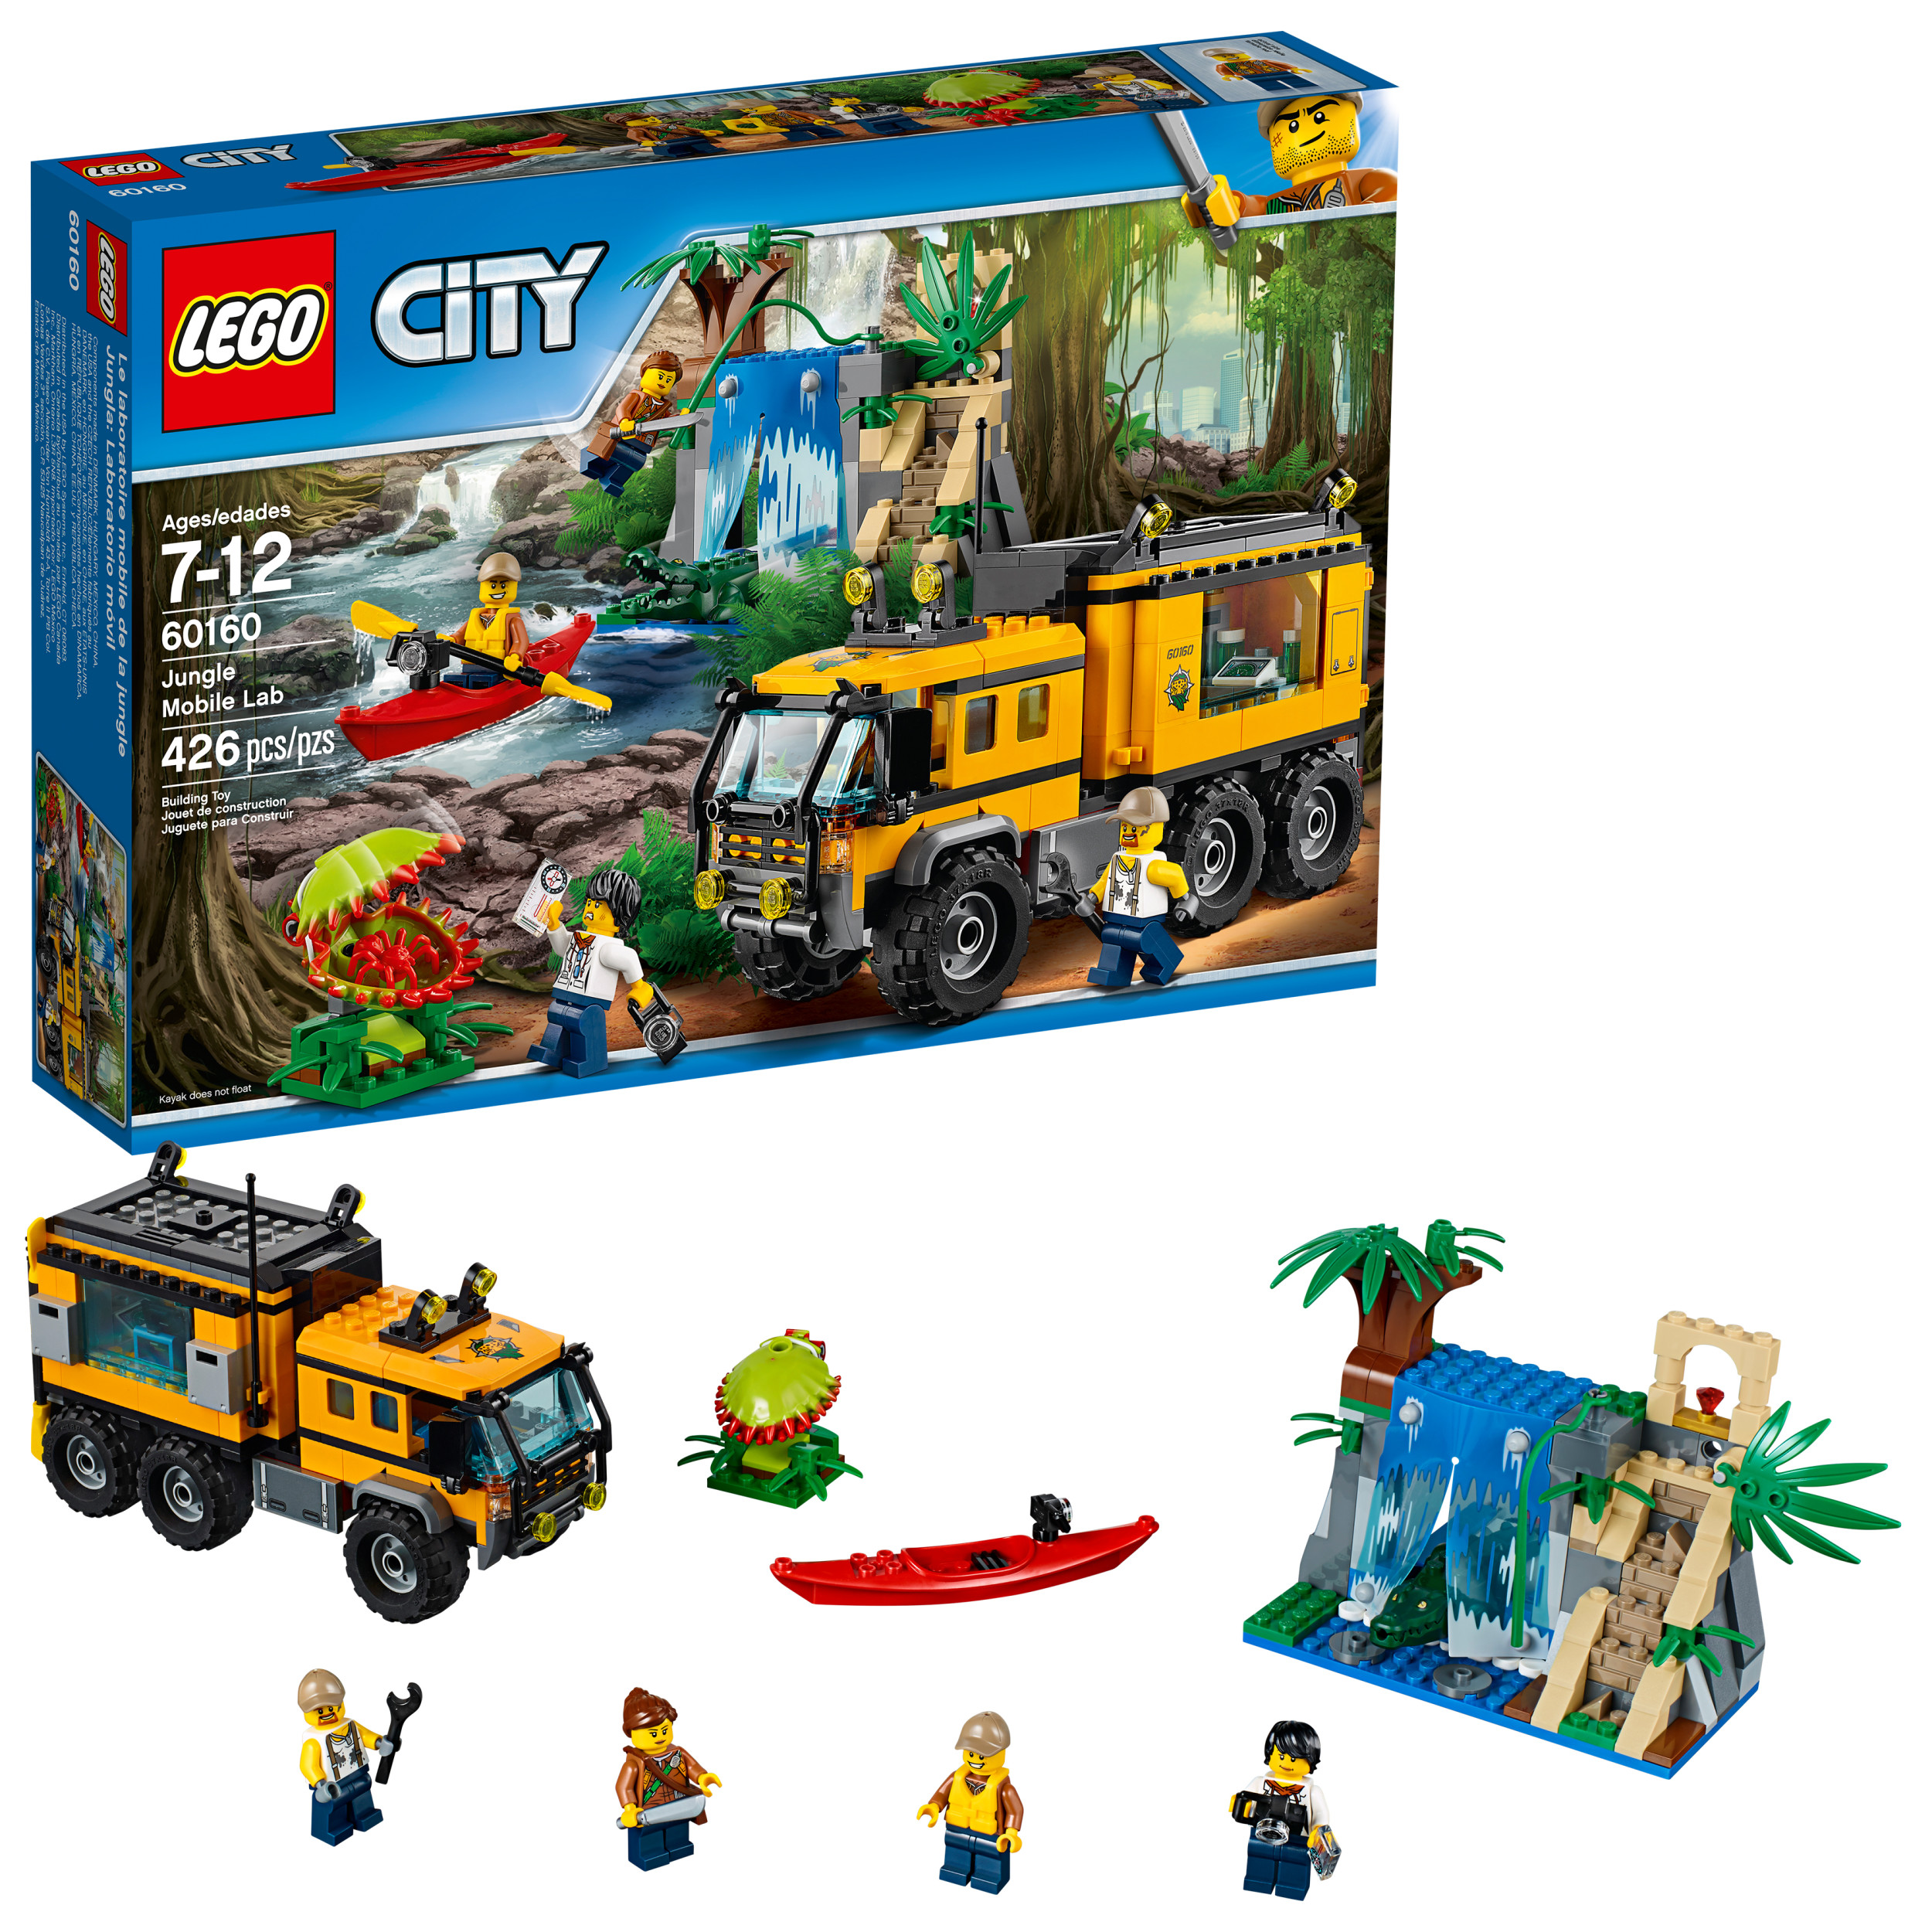 LEGO City Jungle Explorers Jungle Mobile Lab 60160 - image 1 of 7